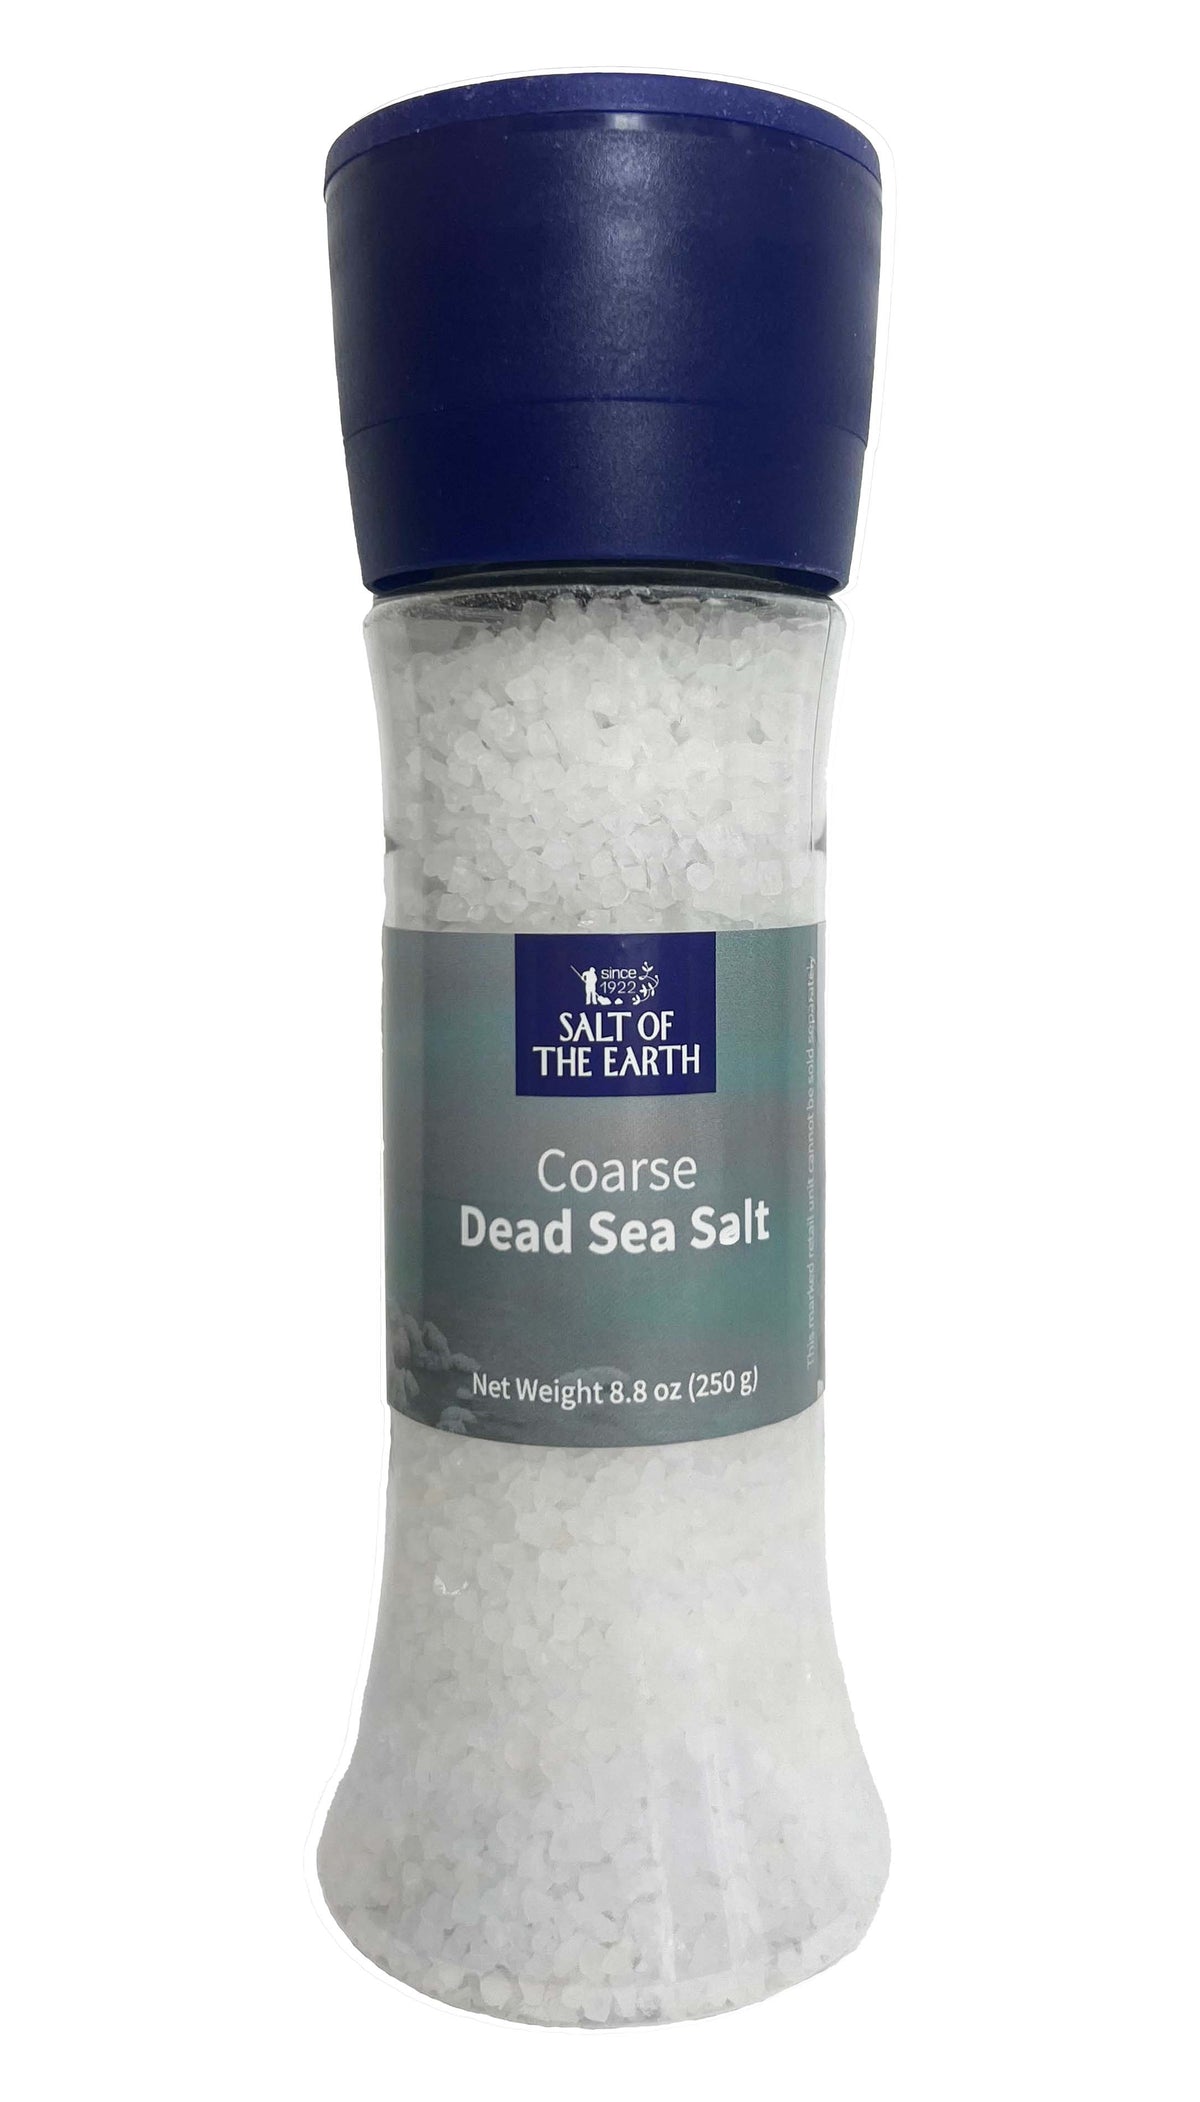 Dead Sea Salt - Salt of the Earth